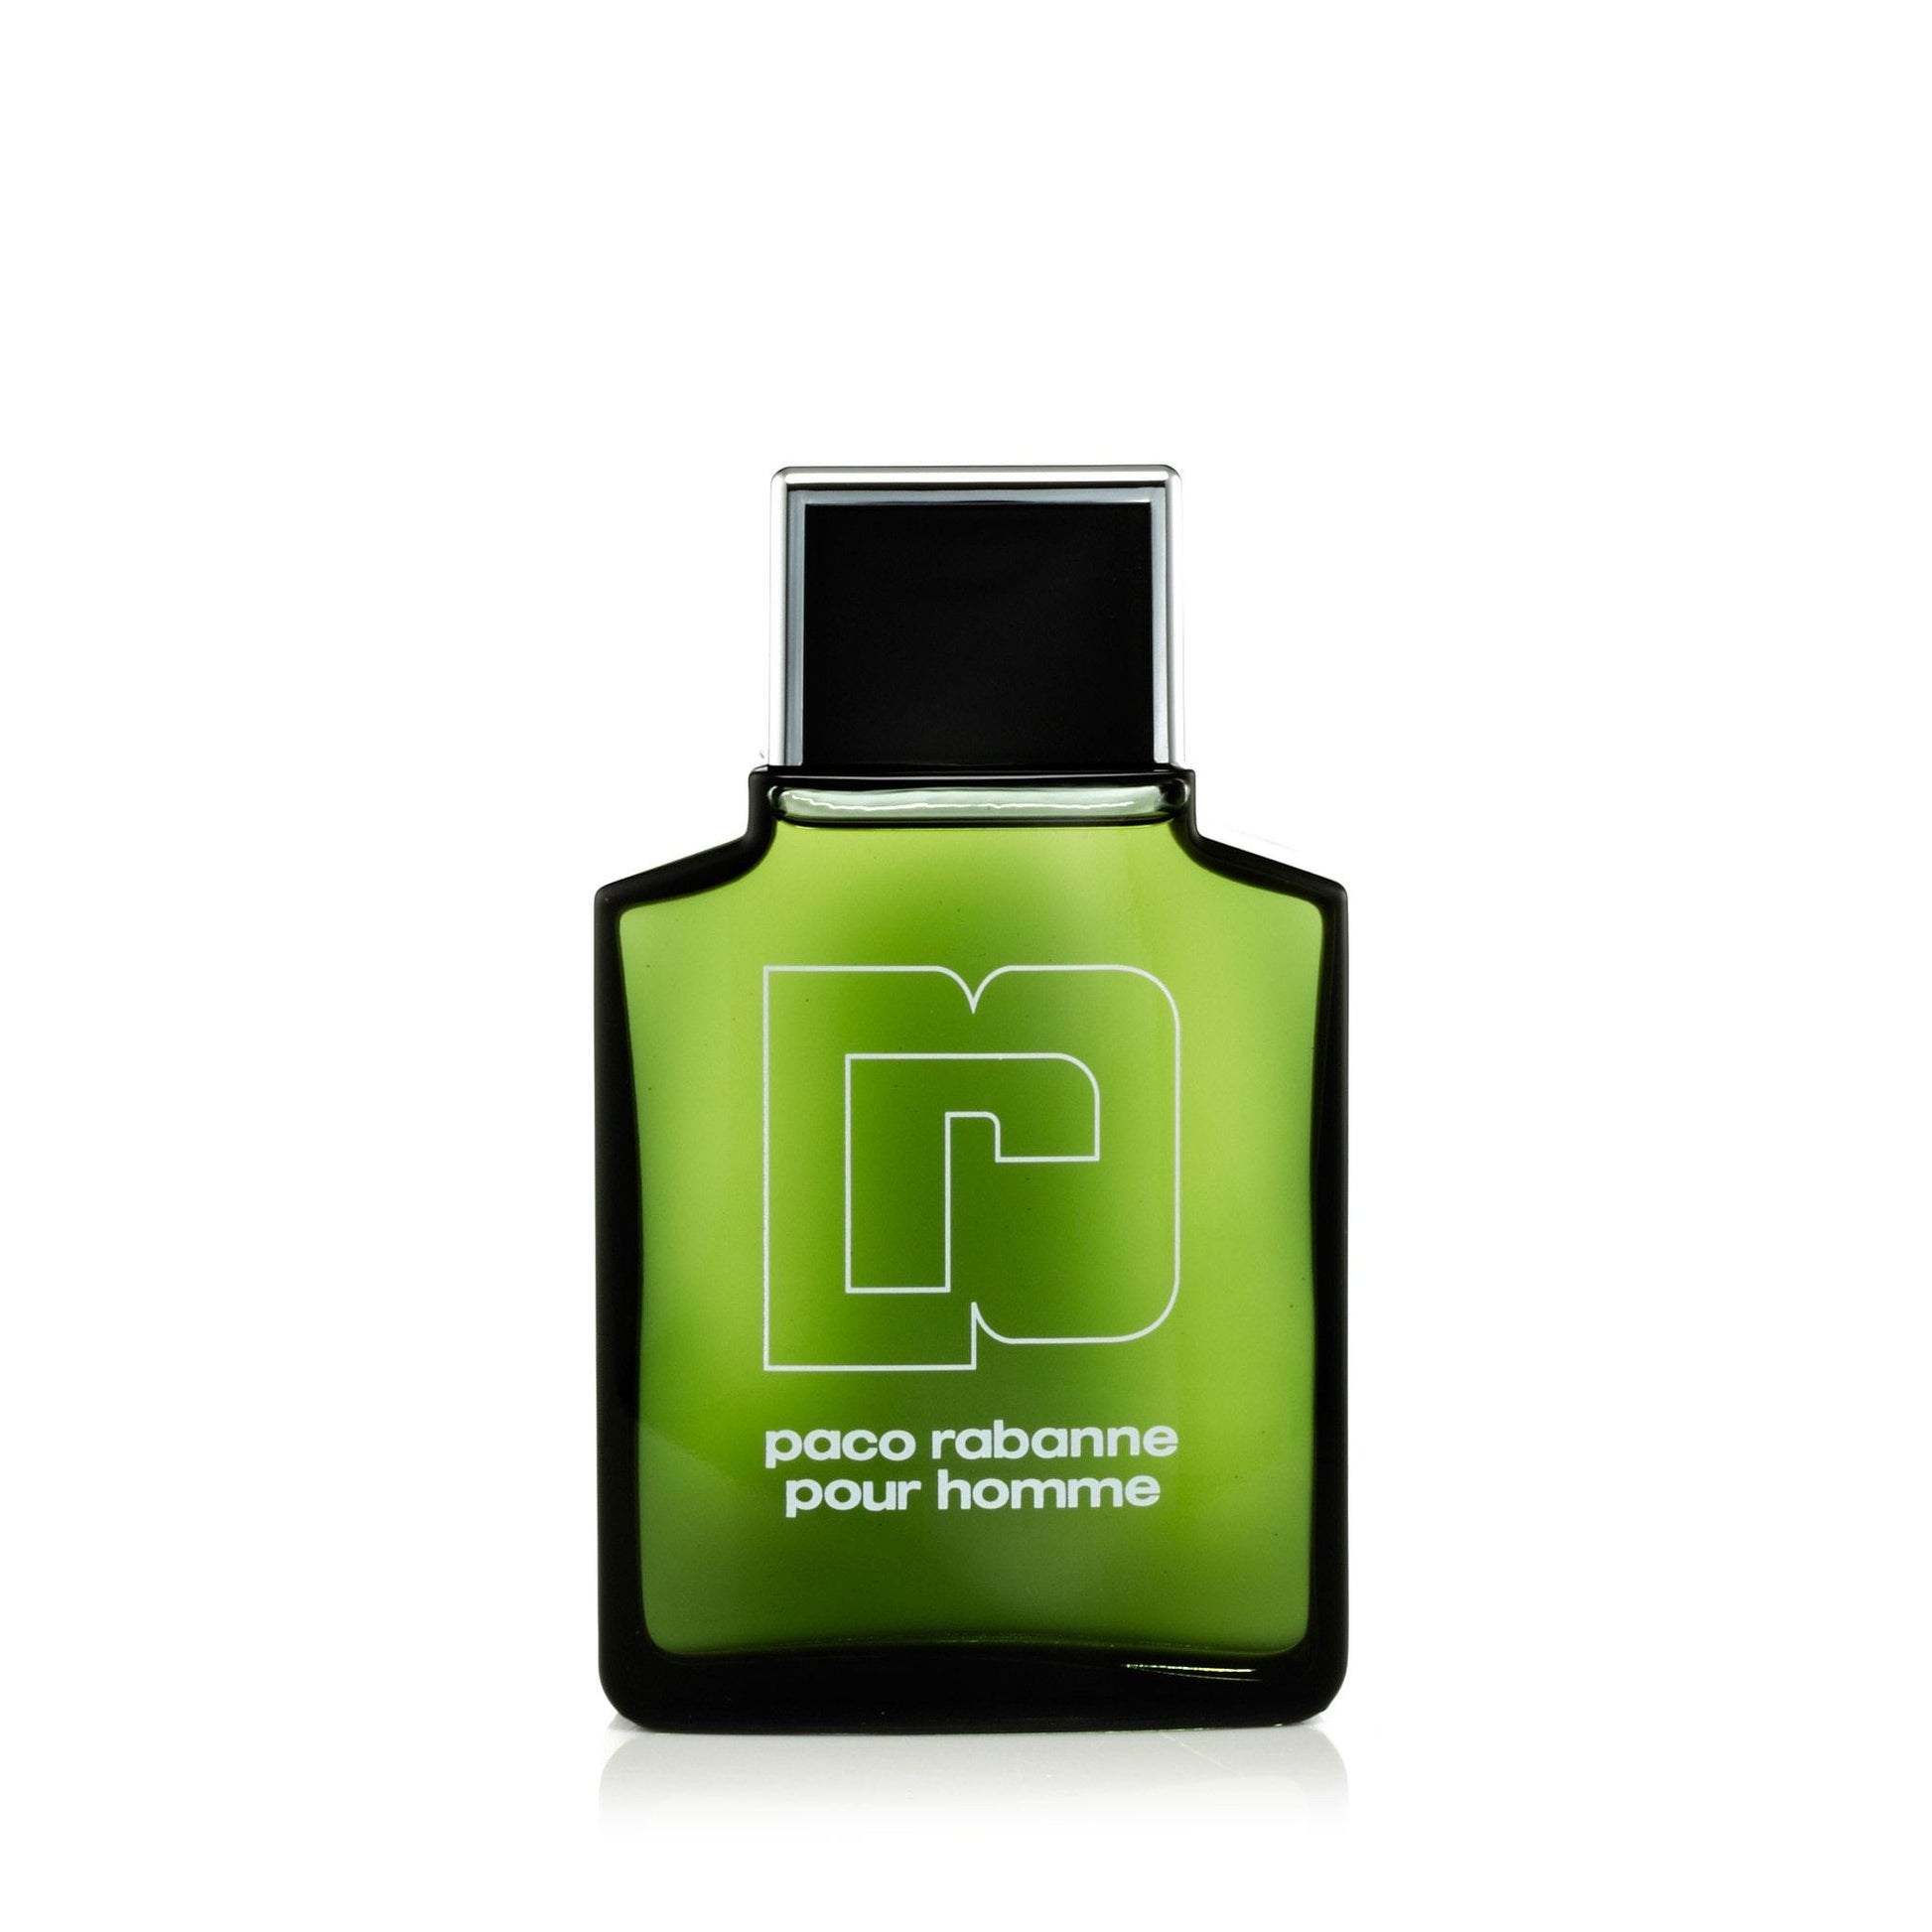 Paco Rabanne Eau de Toilette Spray for Men by Paco Rabanne, Product image 2